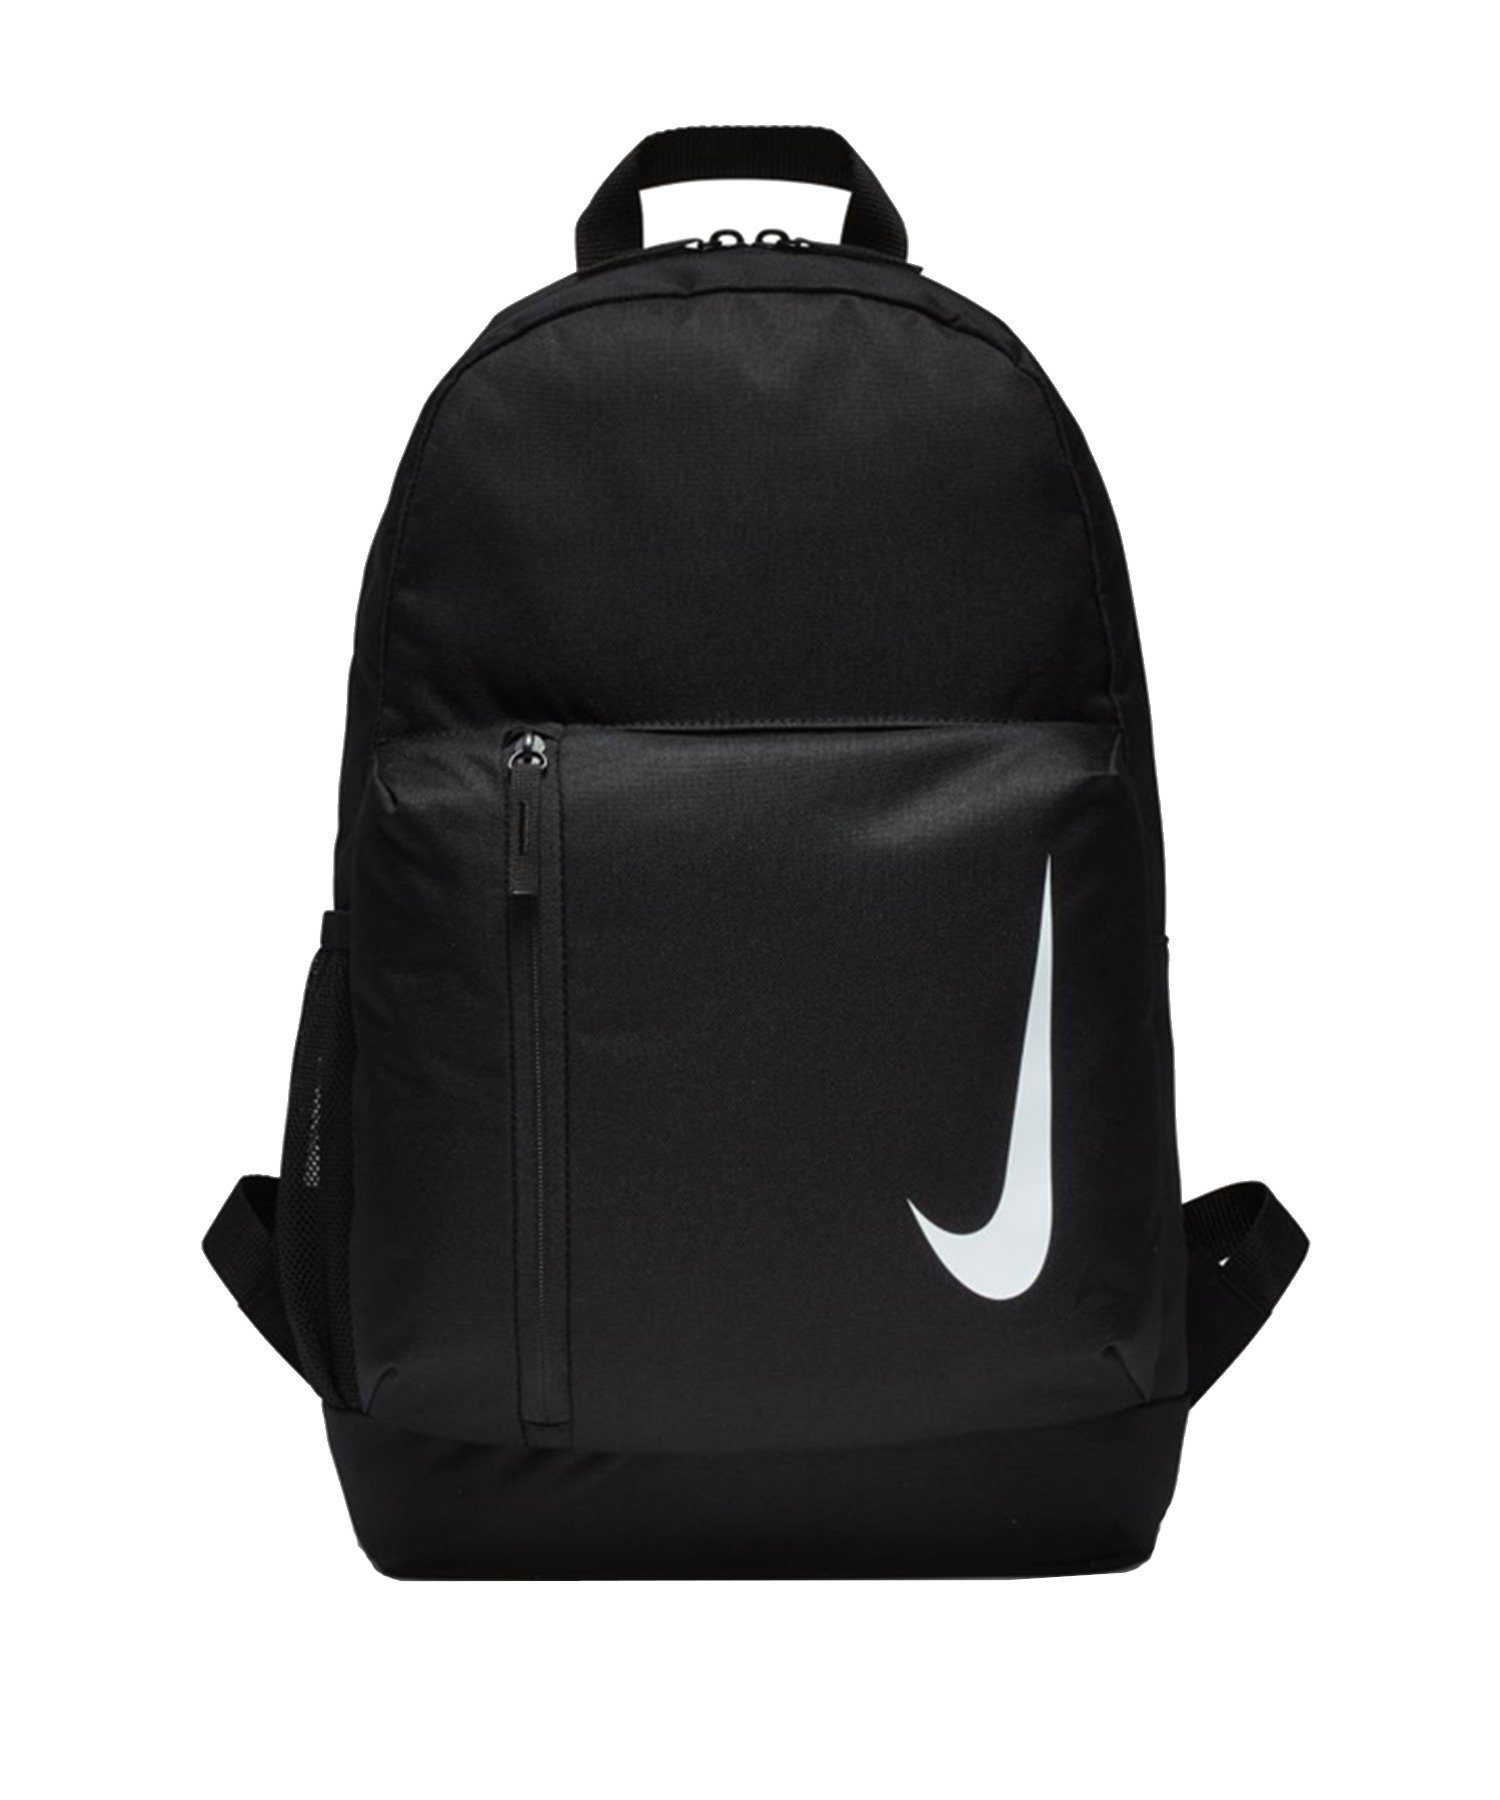 Nike Sporttasche »Youth Backpack Rucksack Kids«, Polsterung